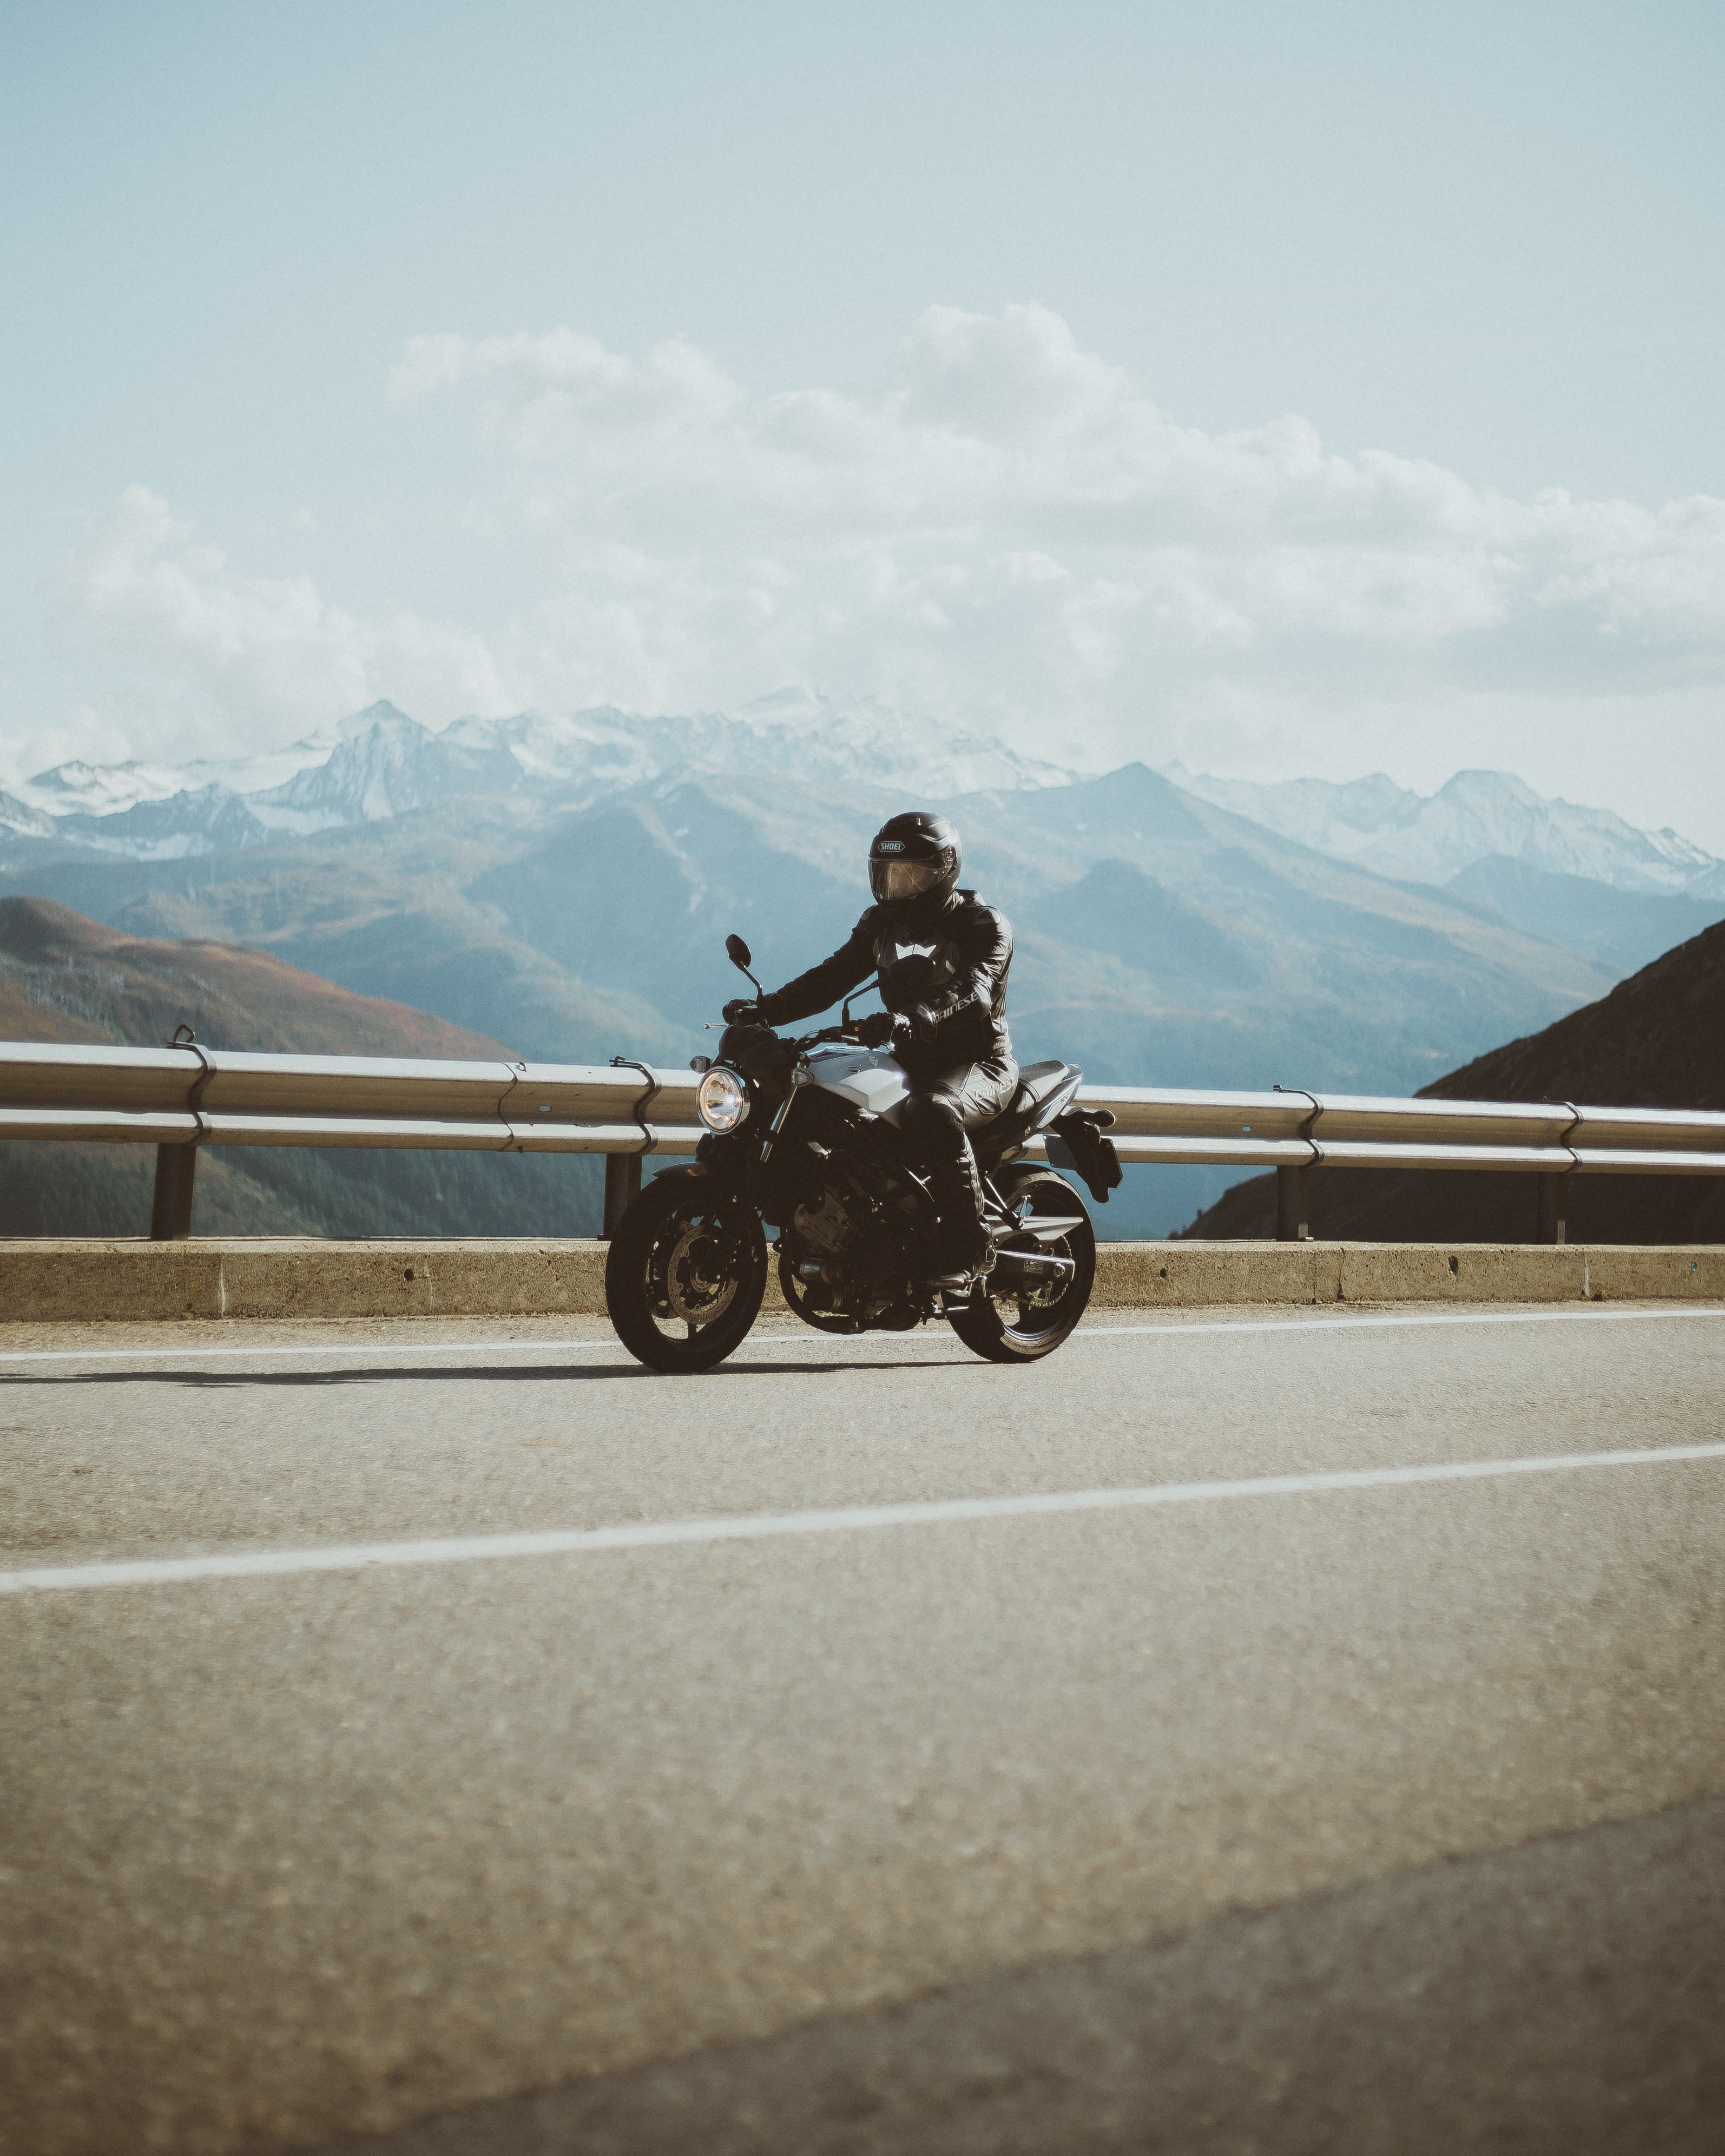 1080p Motorcyclist Wallpaper